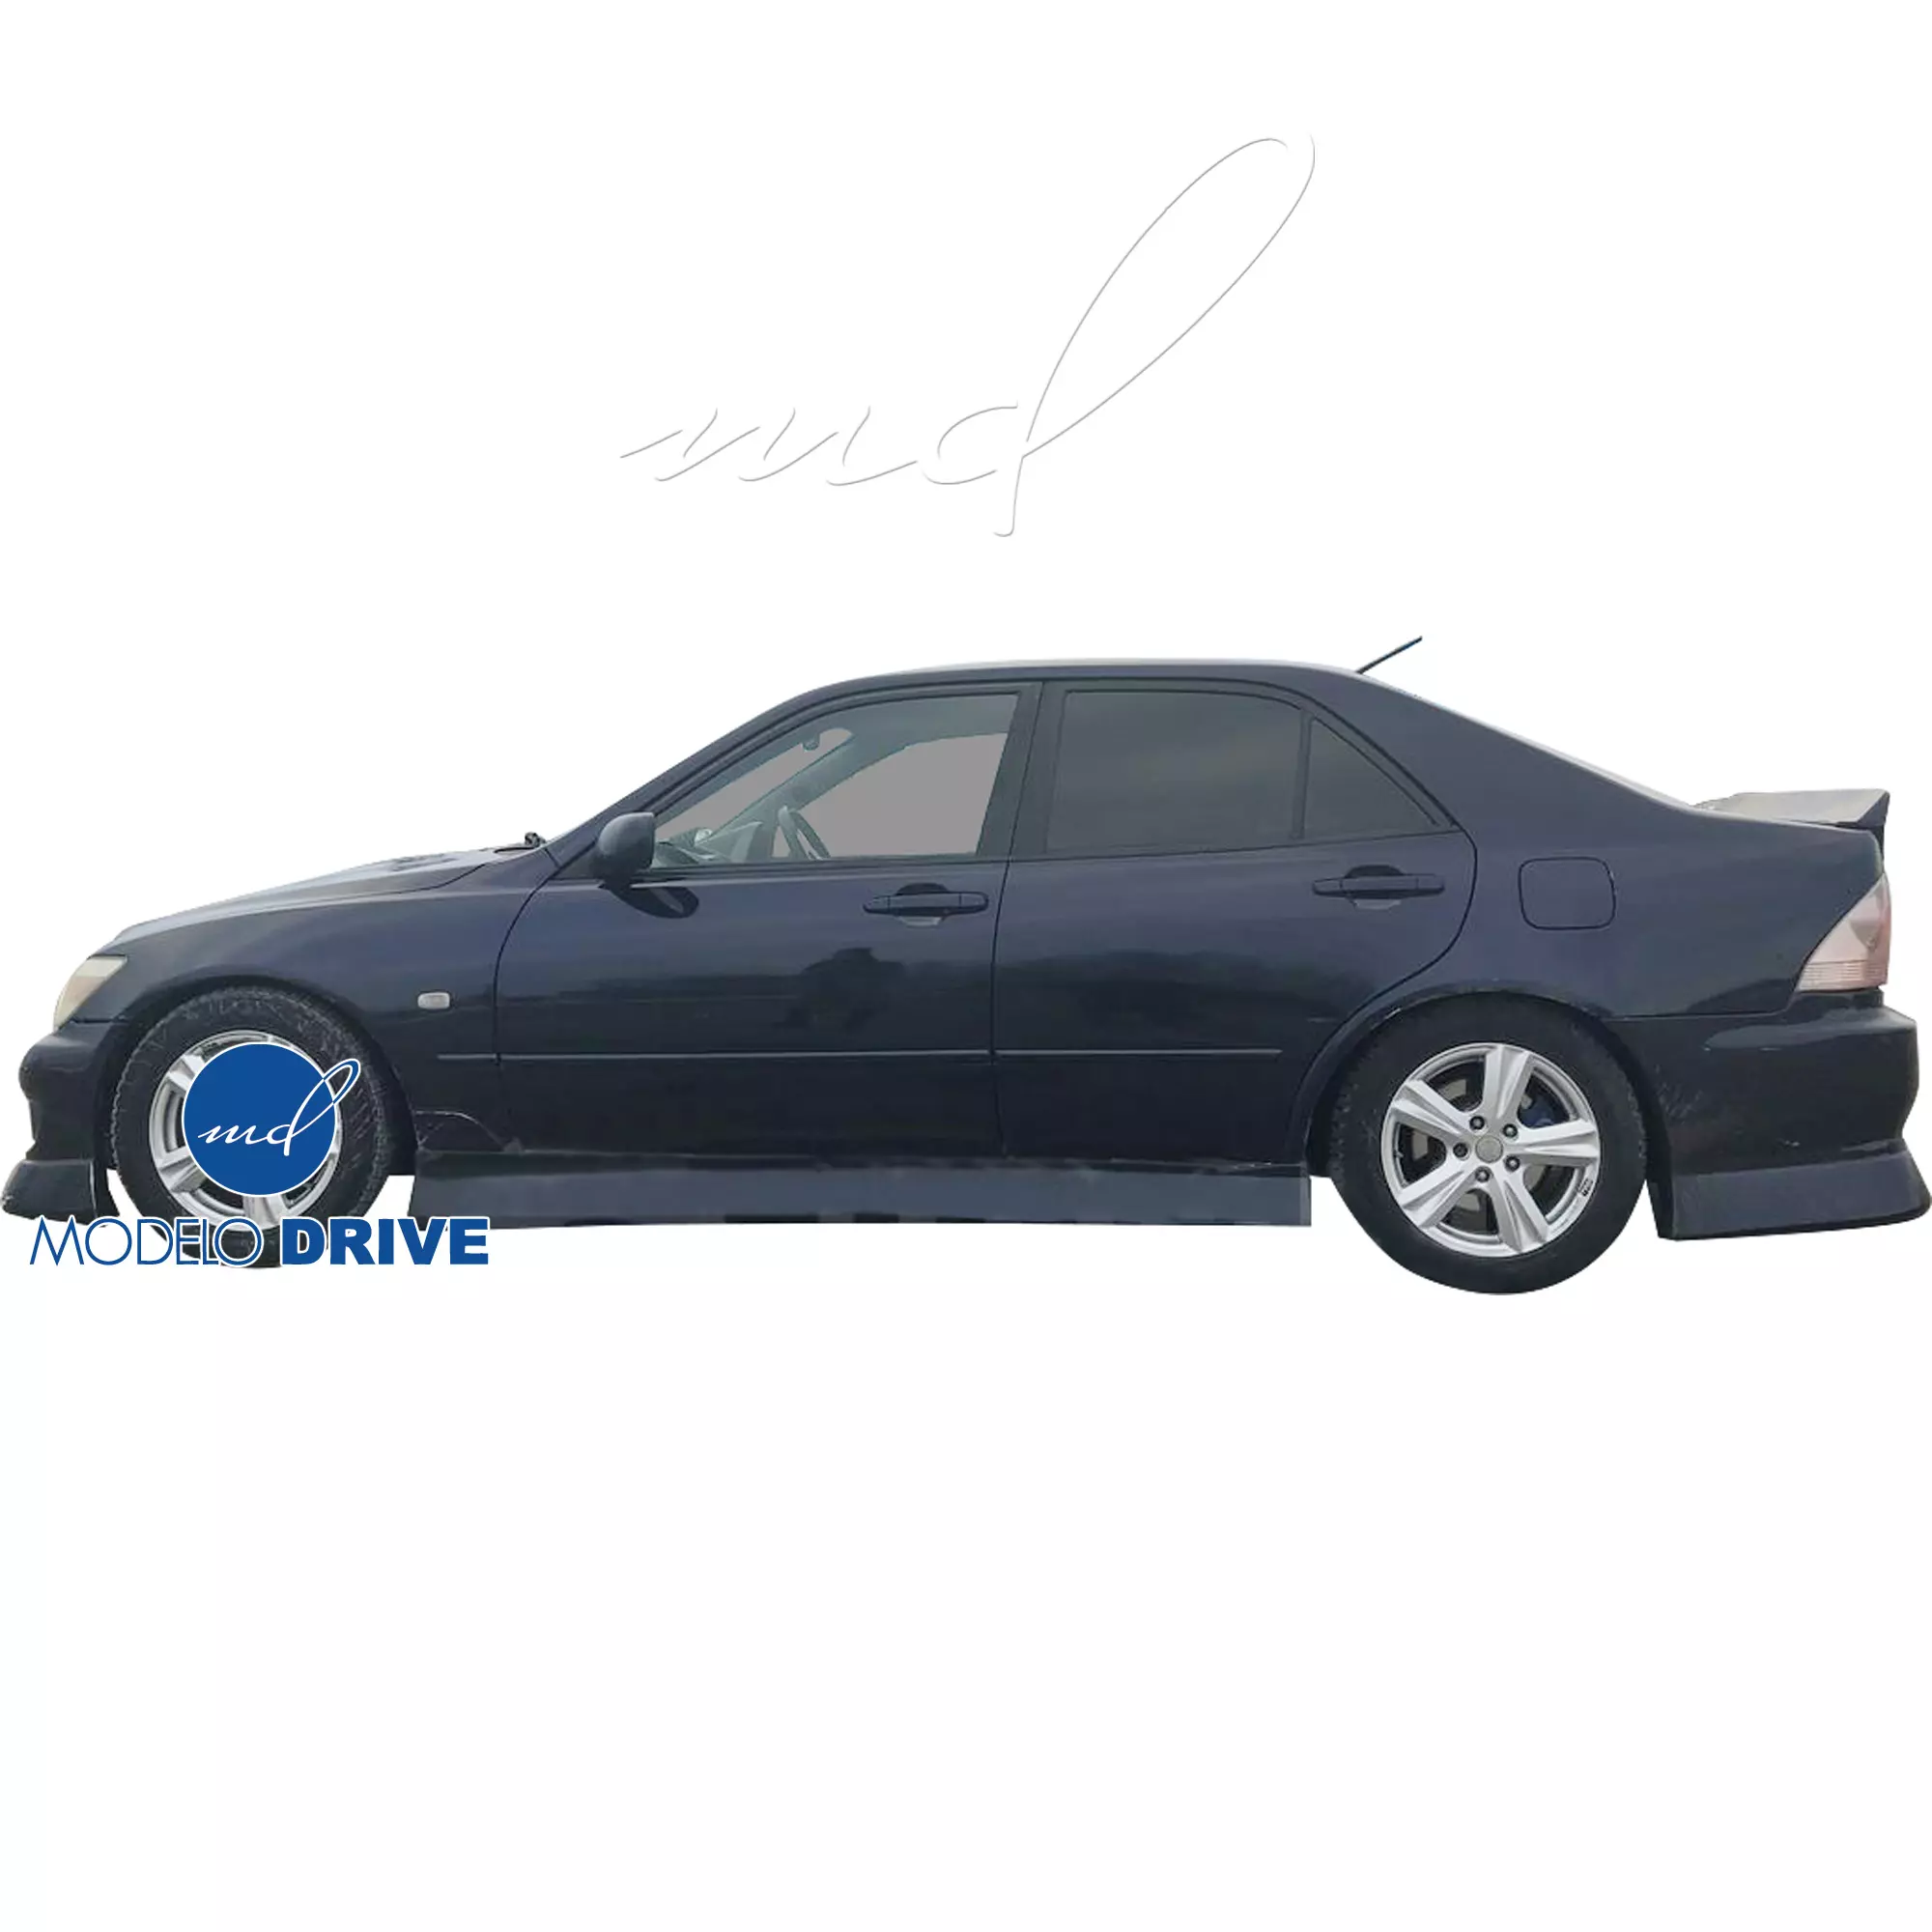 ModeloDrive FRP BSPO Body Kit 4pc > Lexus IS Series IS300 2000-2005> 4dr - Image 37